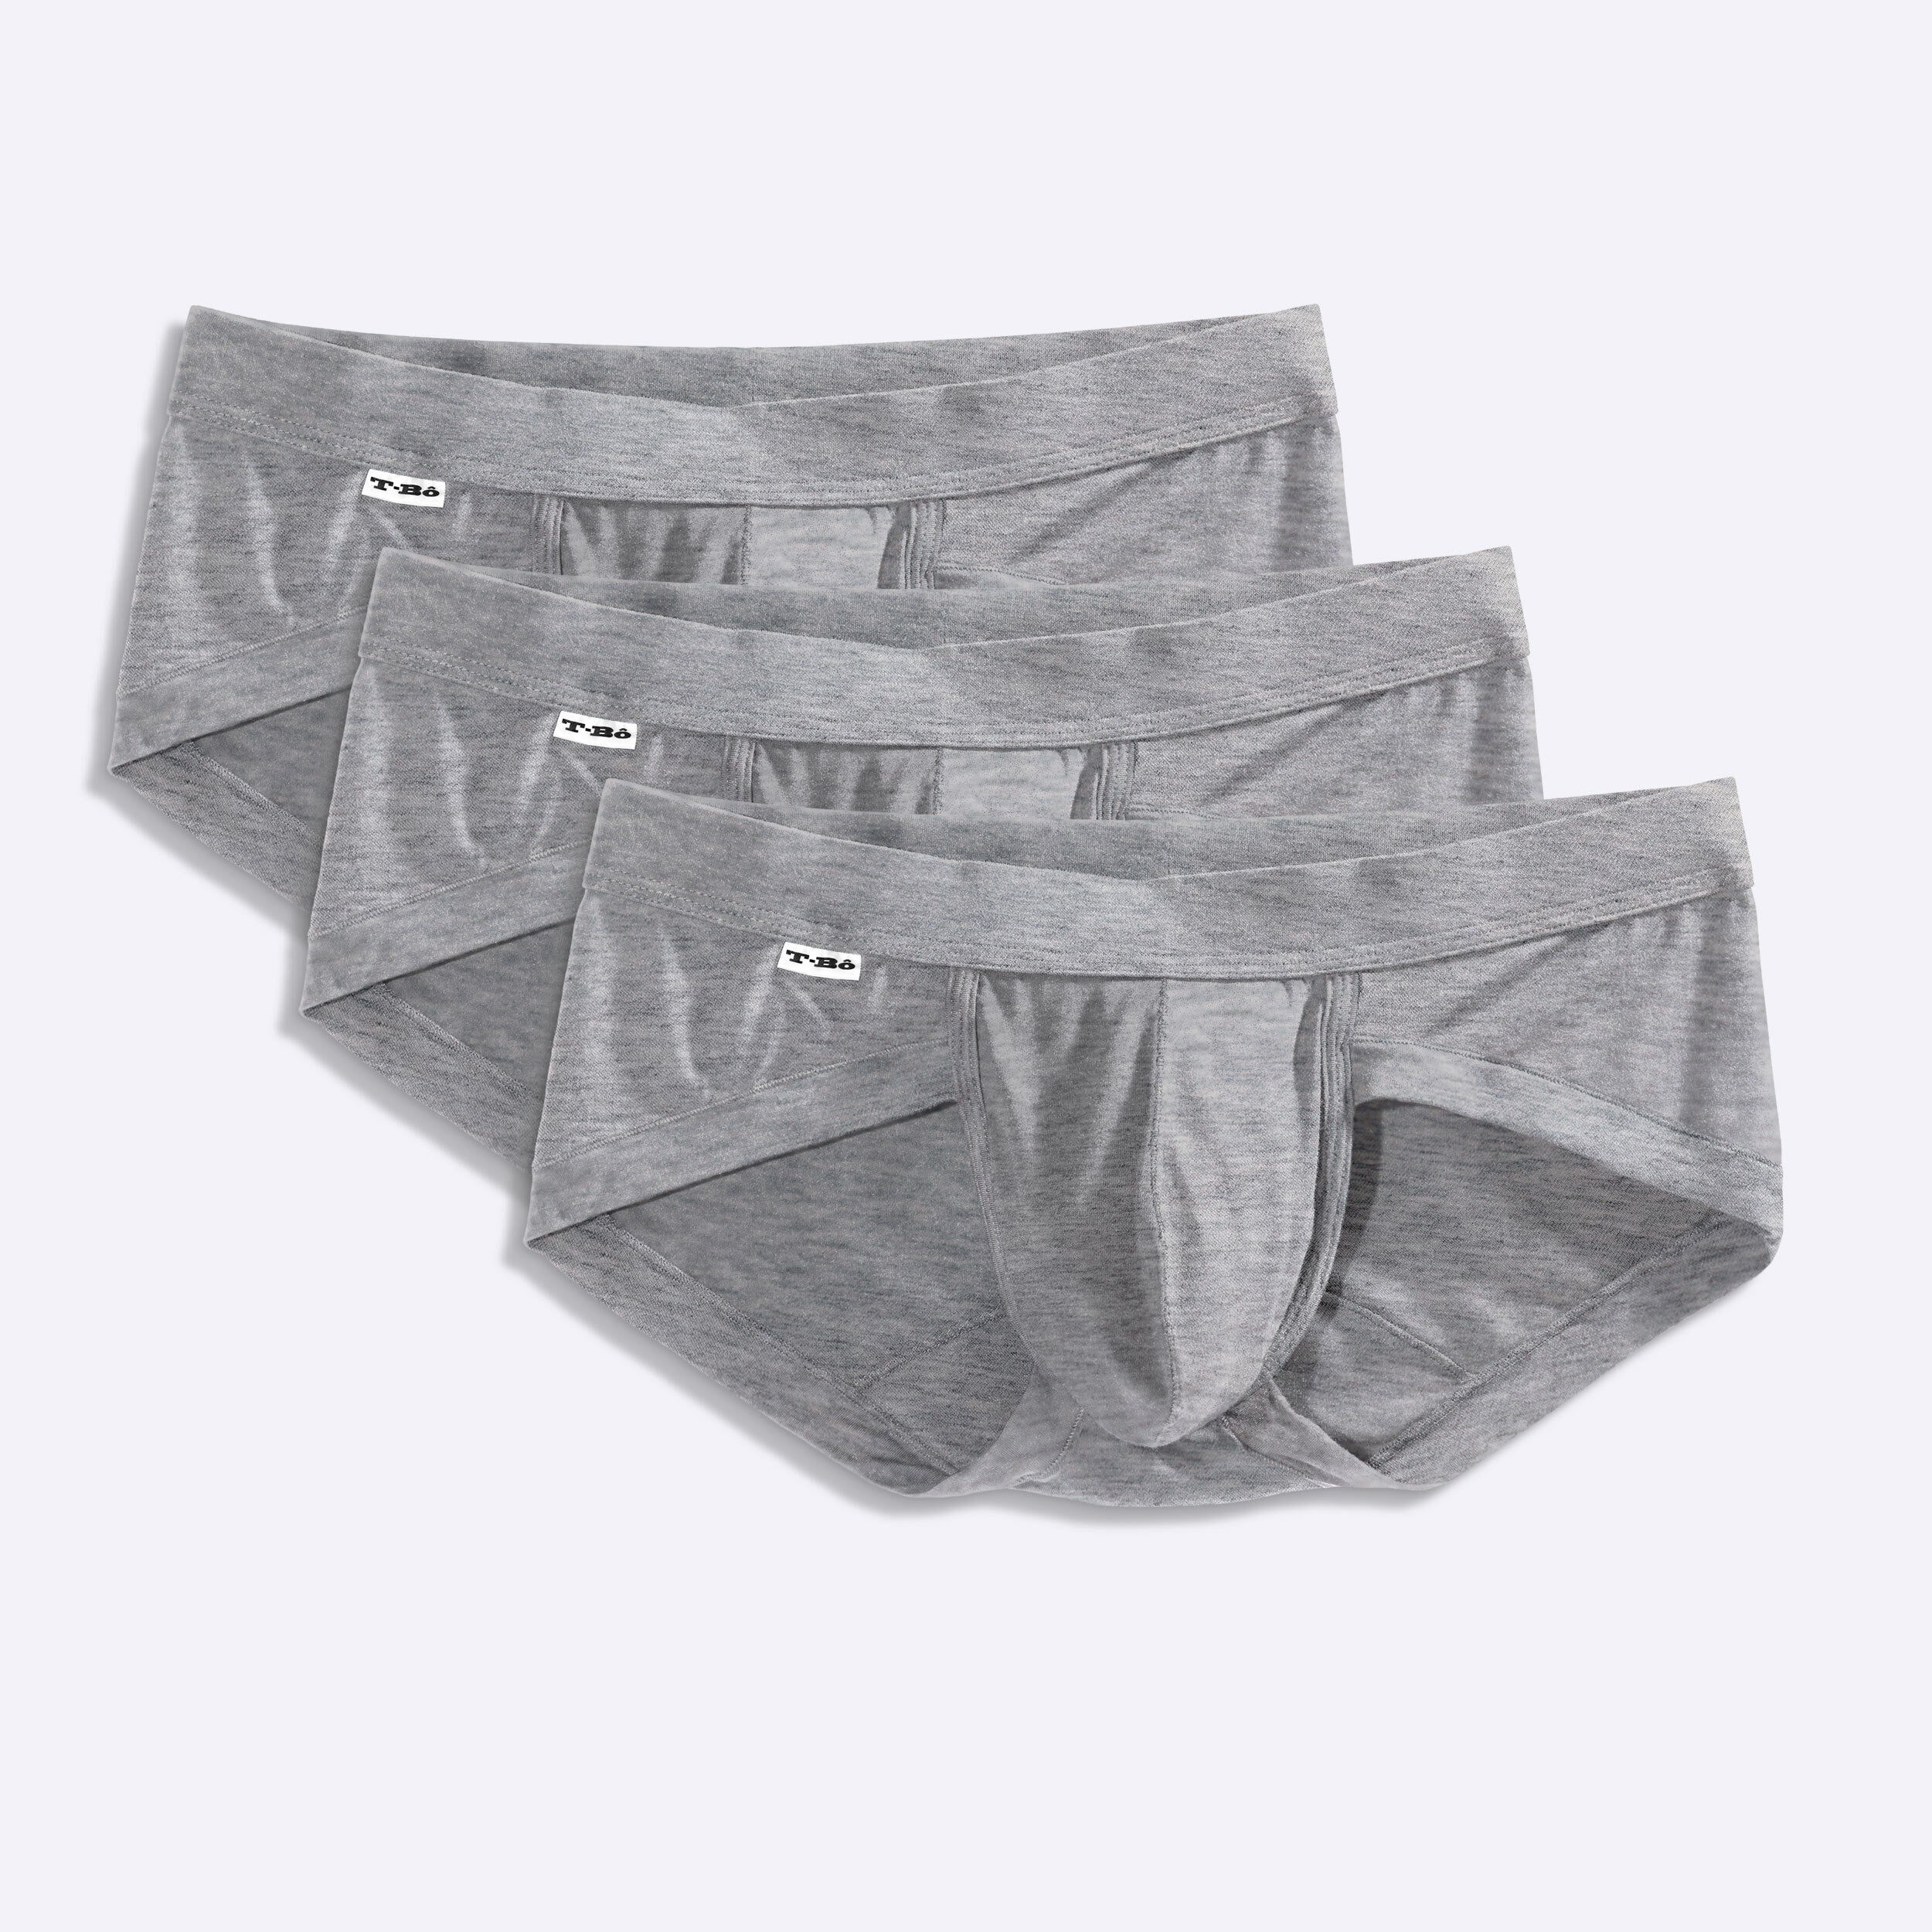 T-Bô Clothing: SALE: $5 underwear. Only a few left.